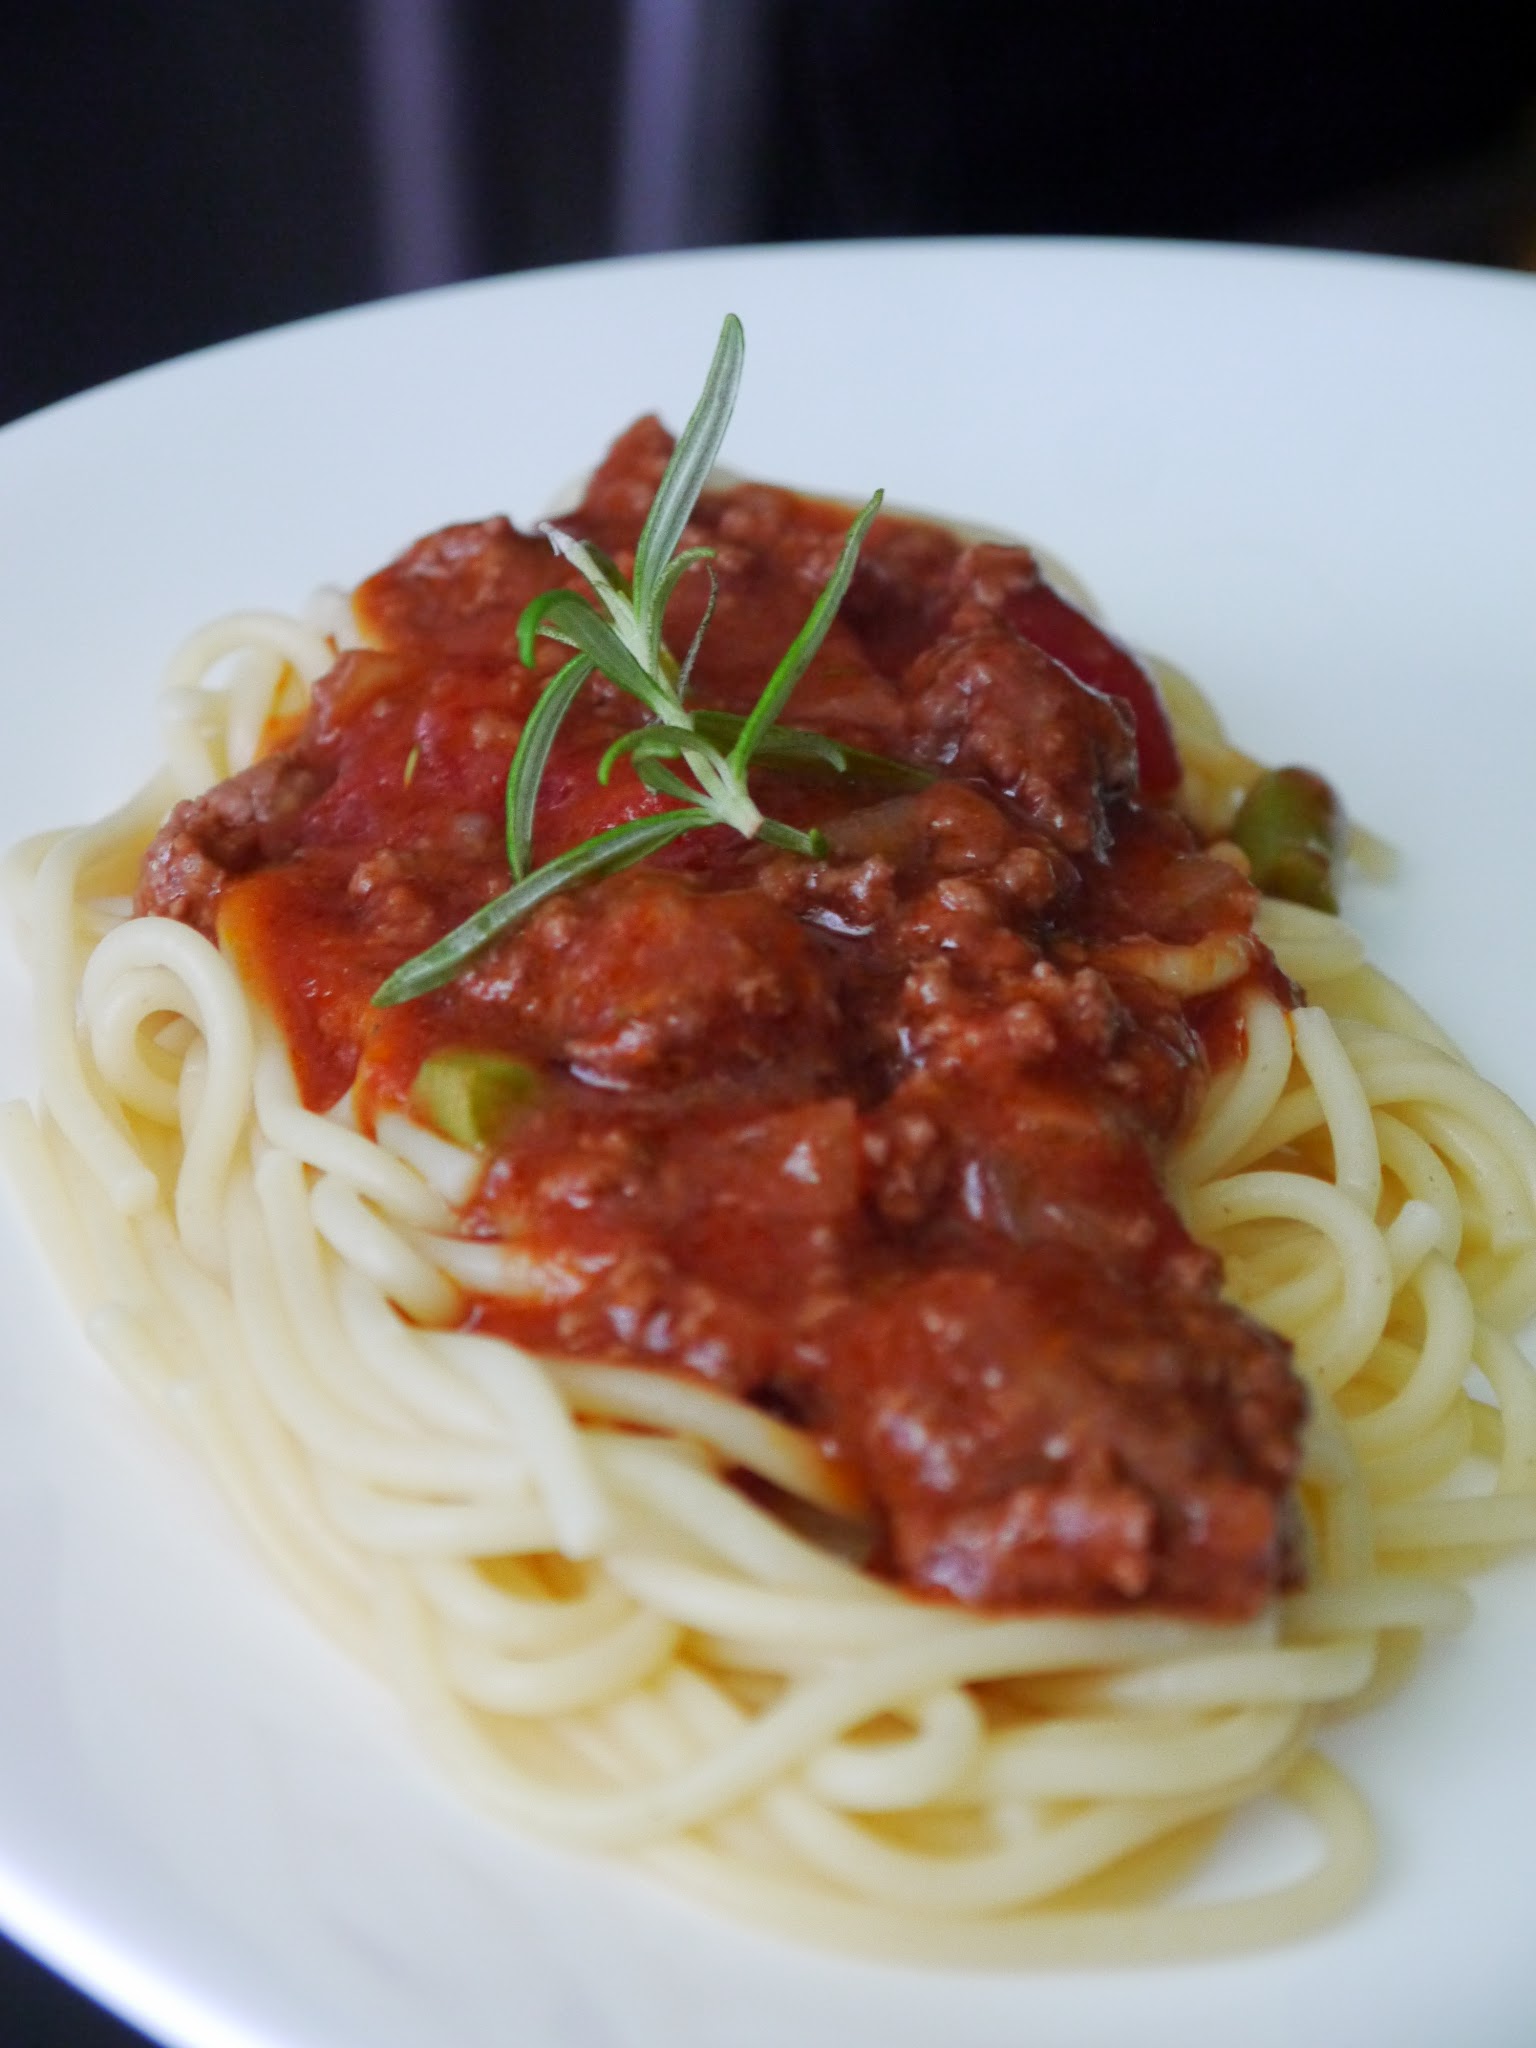 Plated Spaghetti dish